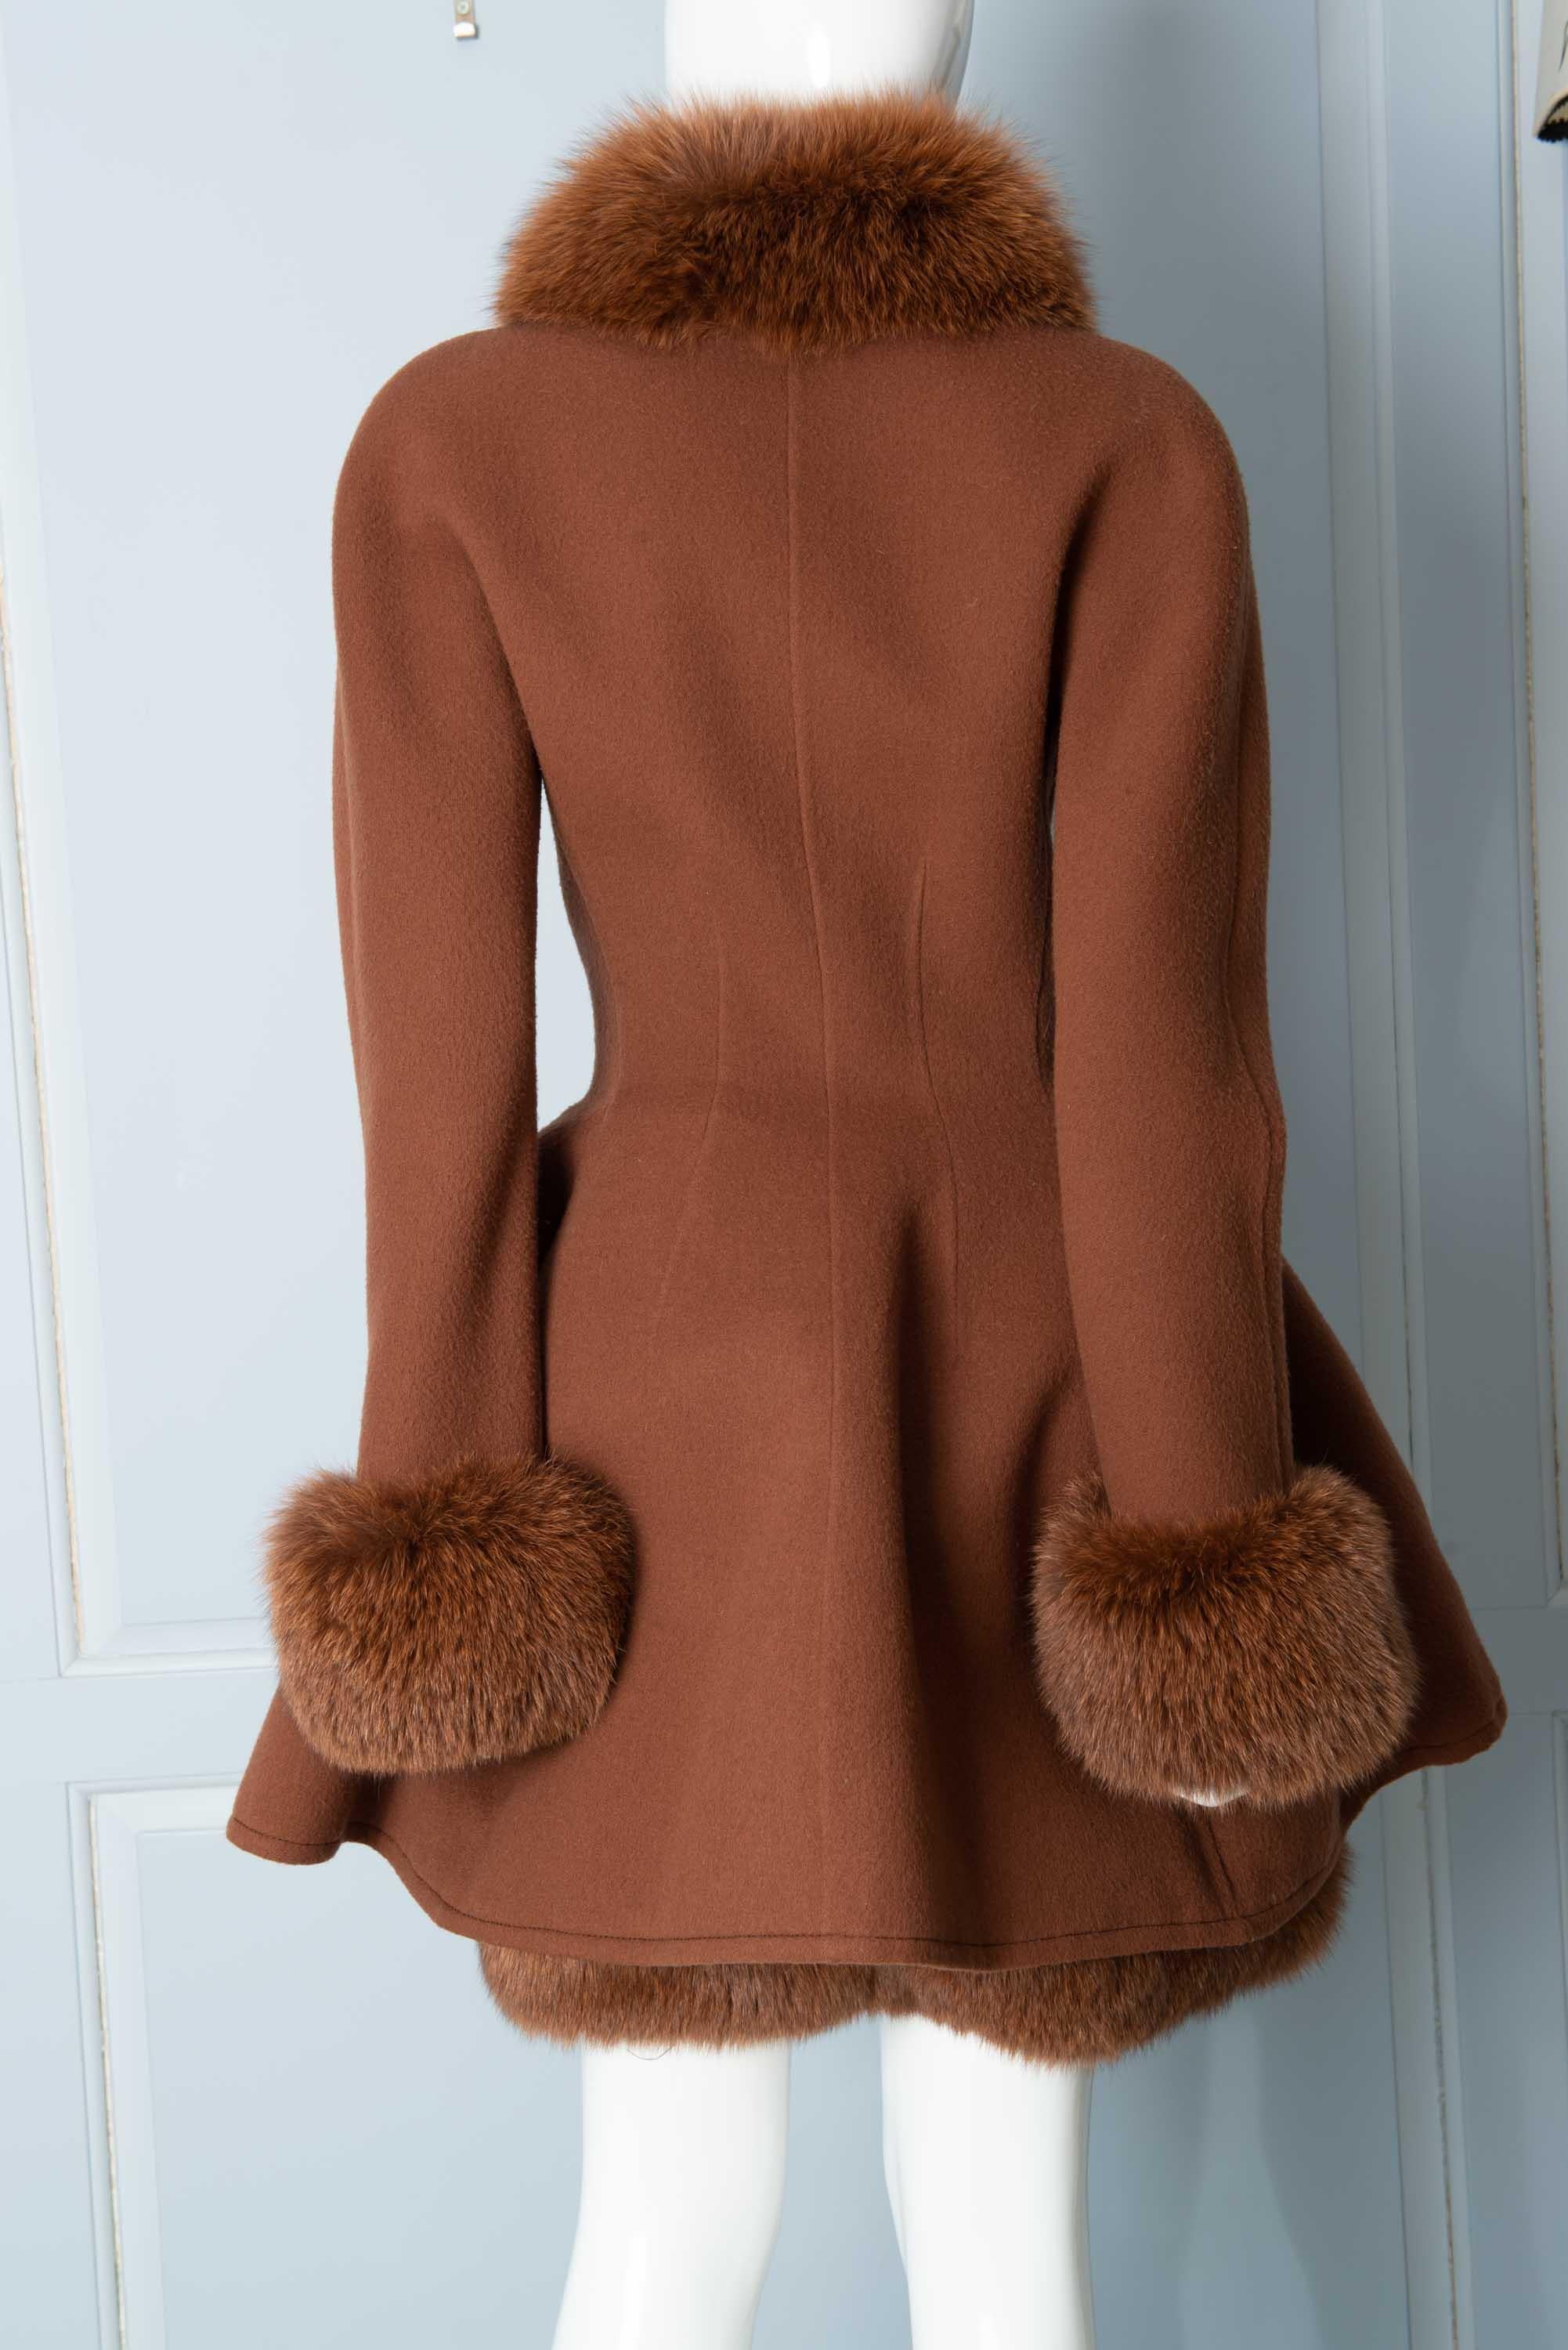 brown fluffy dress